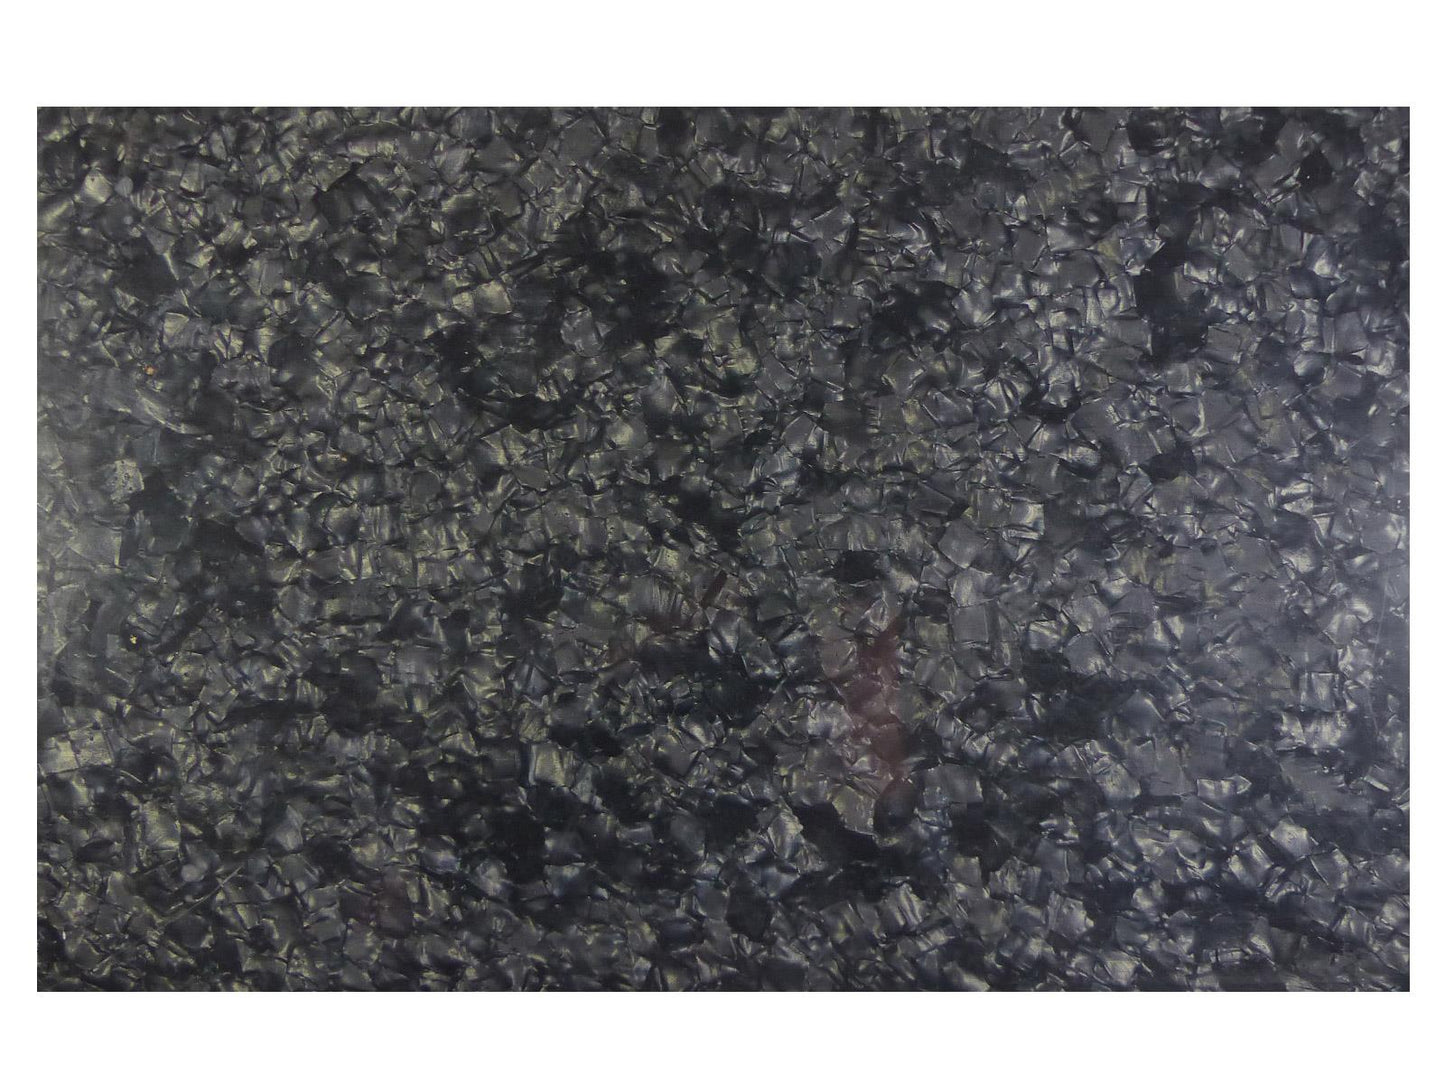 Borderlands Black Pearloid PVC Sheet - 430x290x2.5mm (16.9x11.42x0.1"), 4-Ply